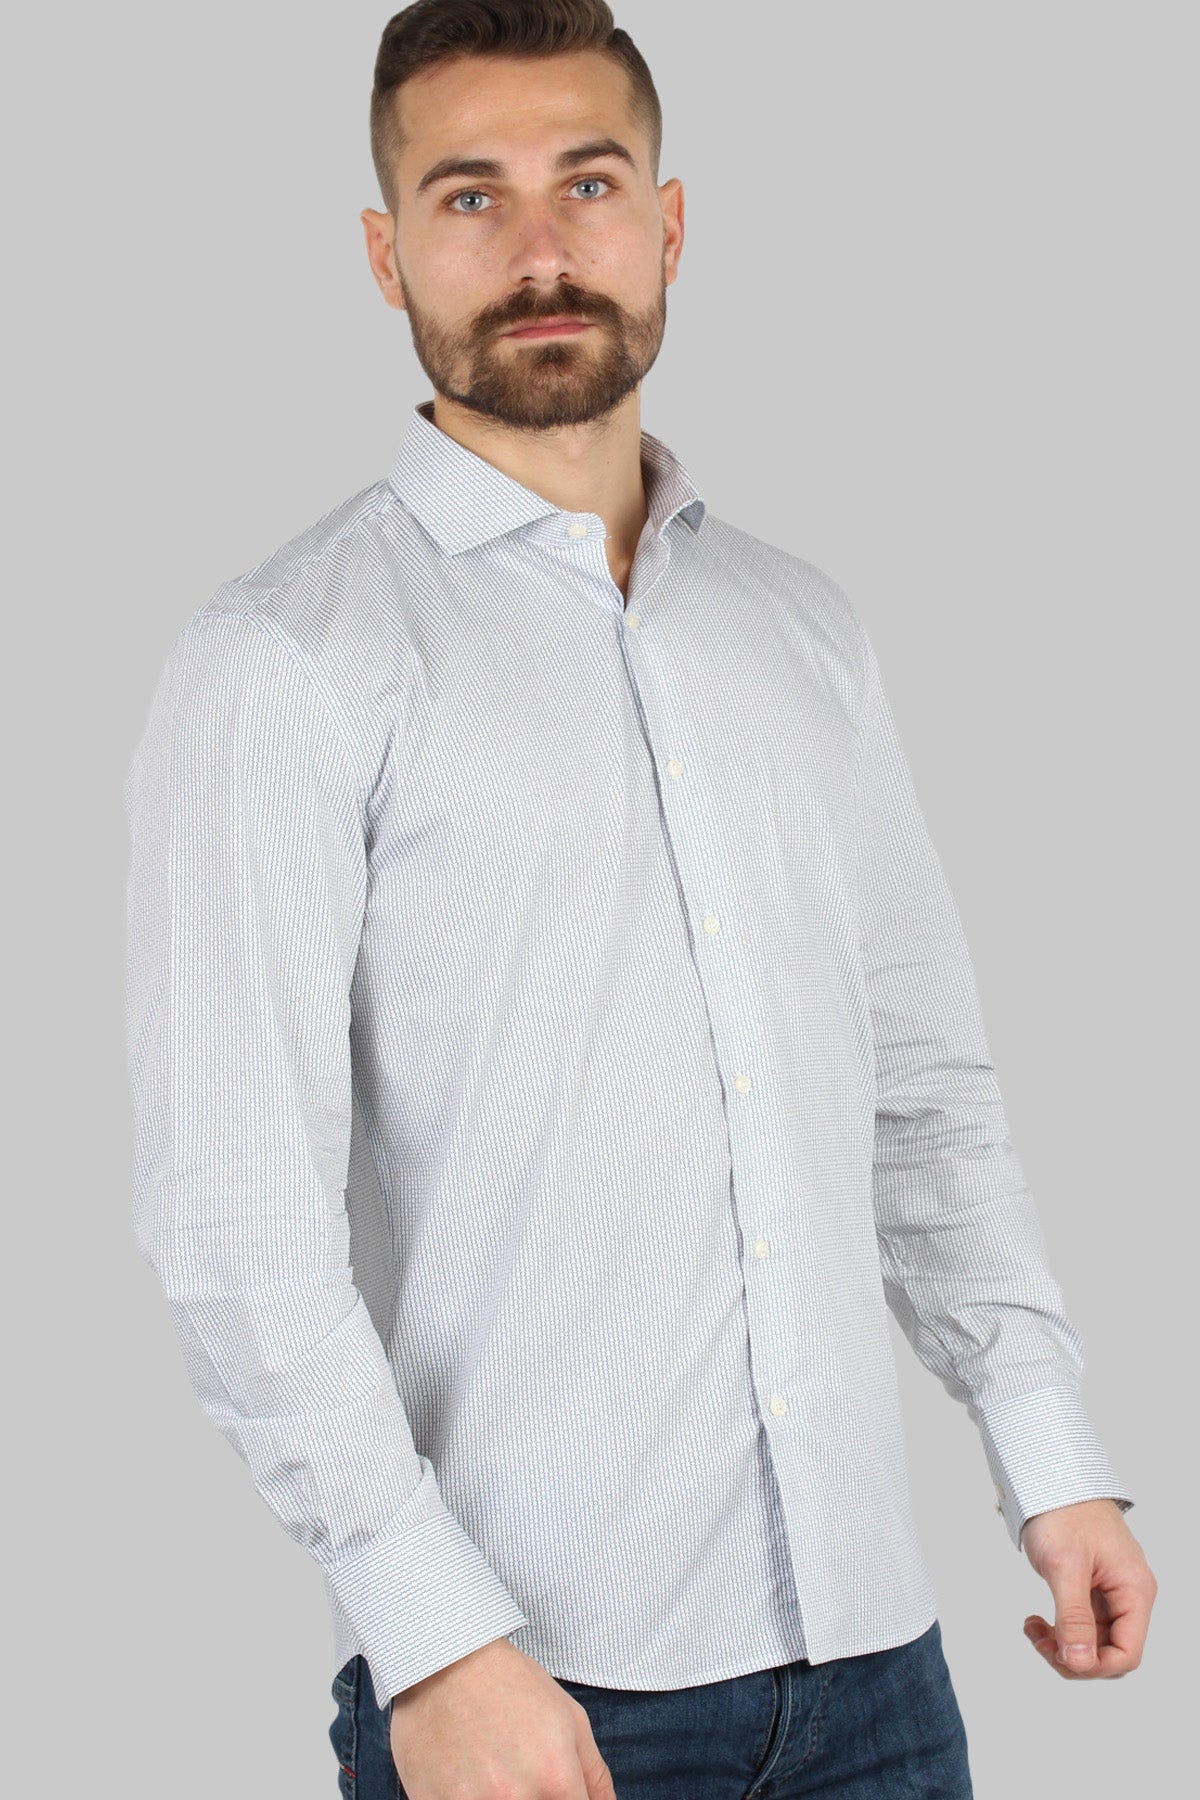 Camicie Estive Uomo | Vivesto.it - Vivesto.it - Medium